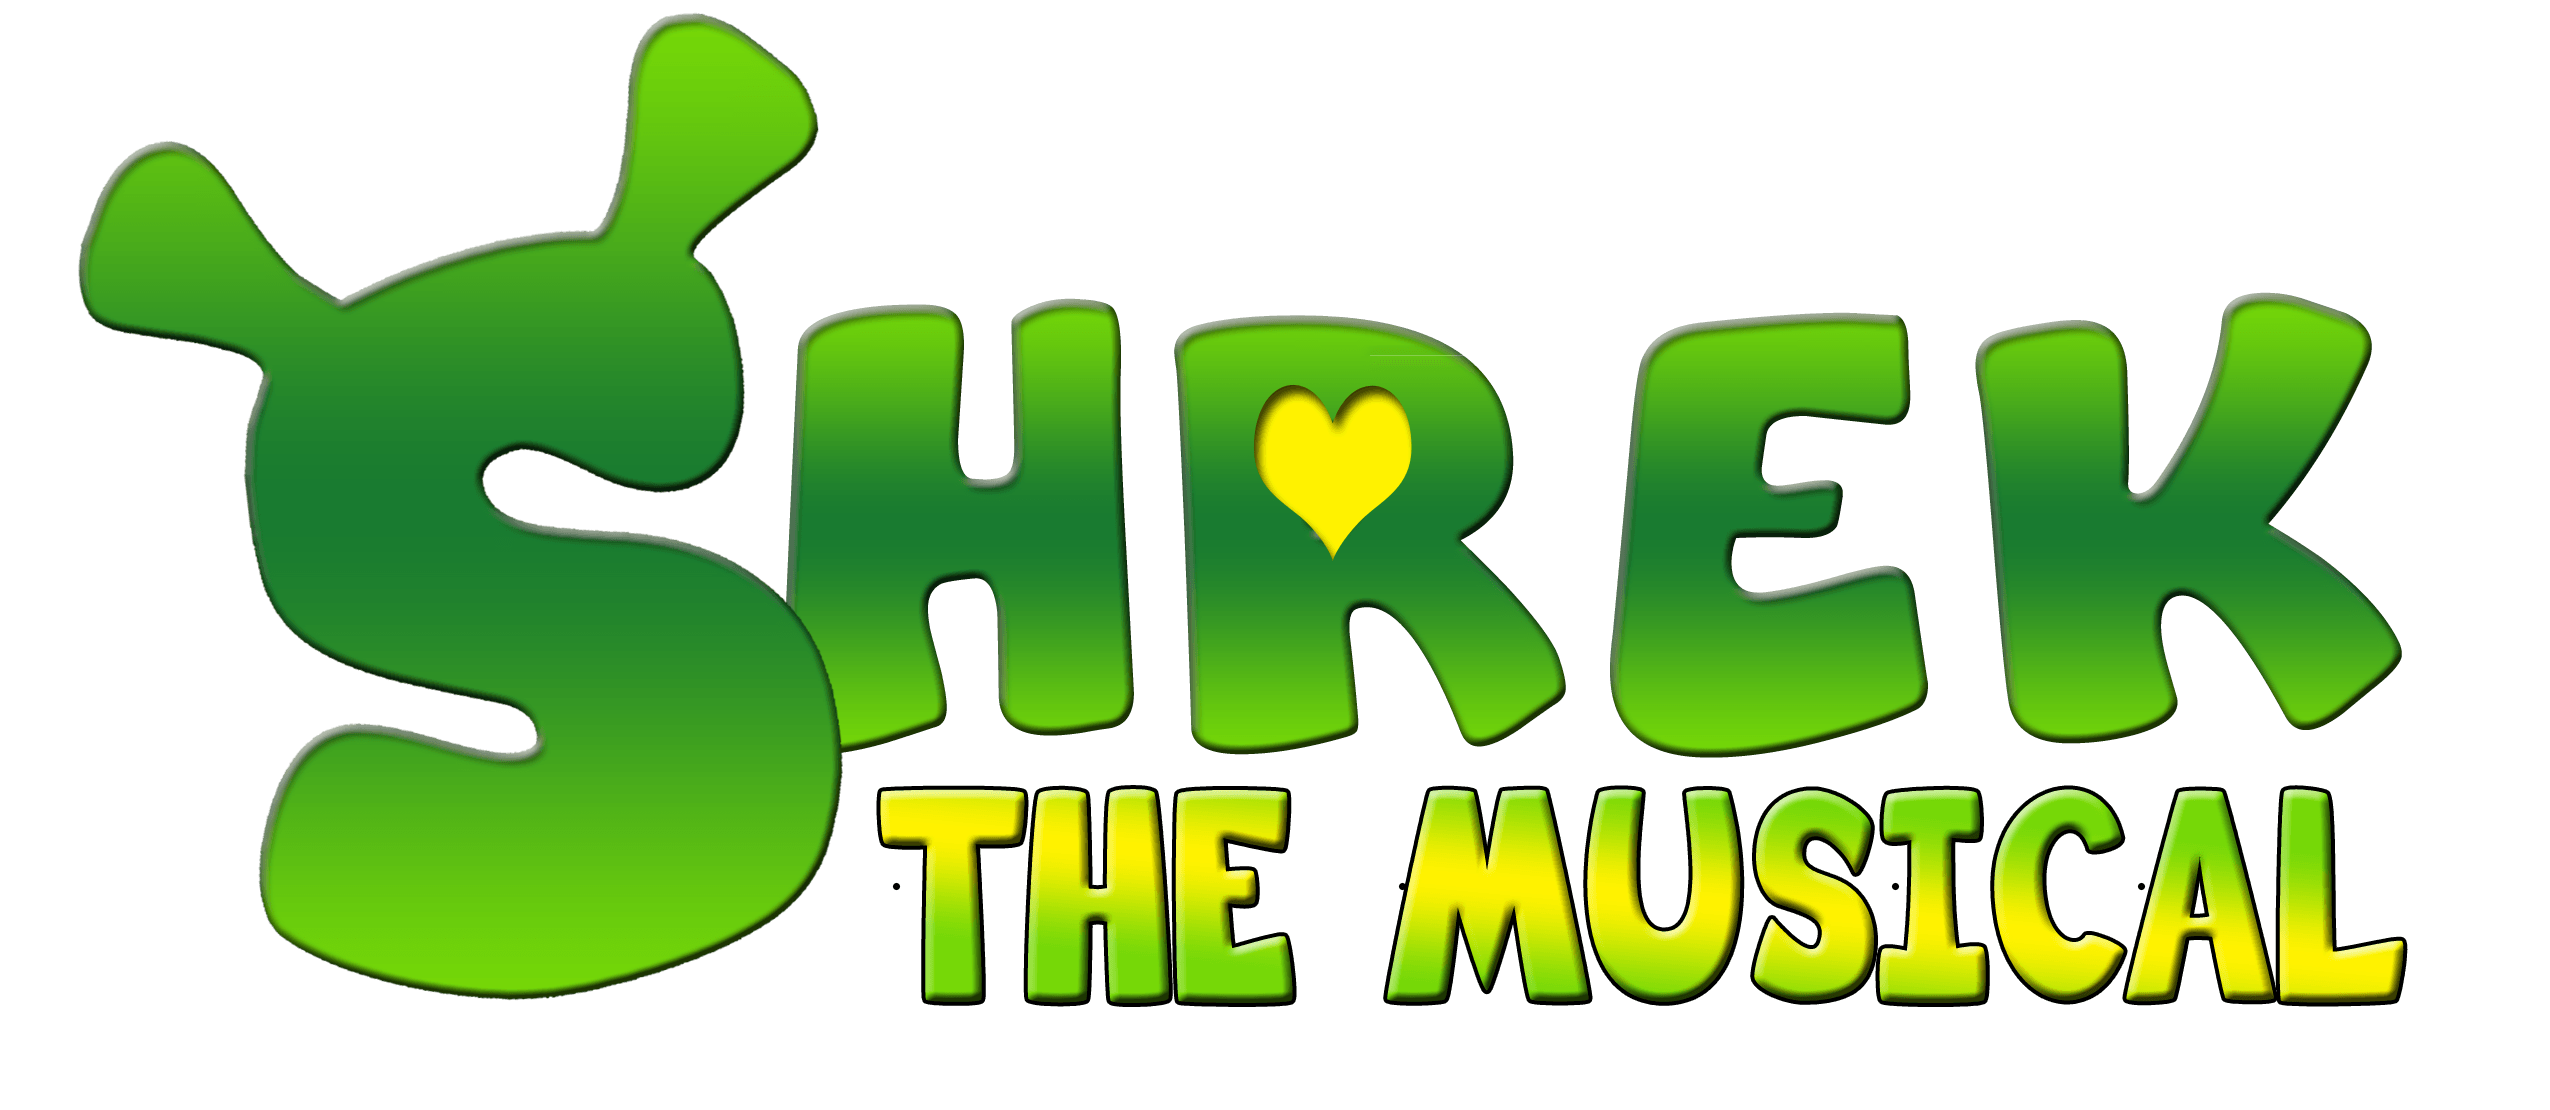 Shrek Logo - Shrek logo | The Community House